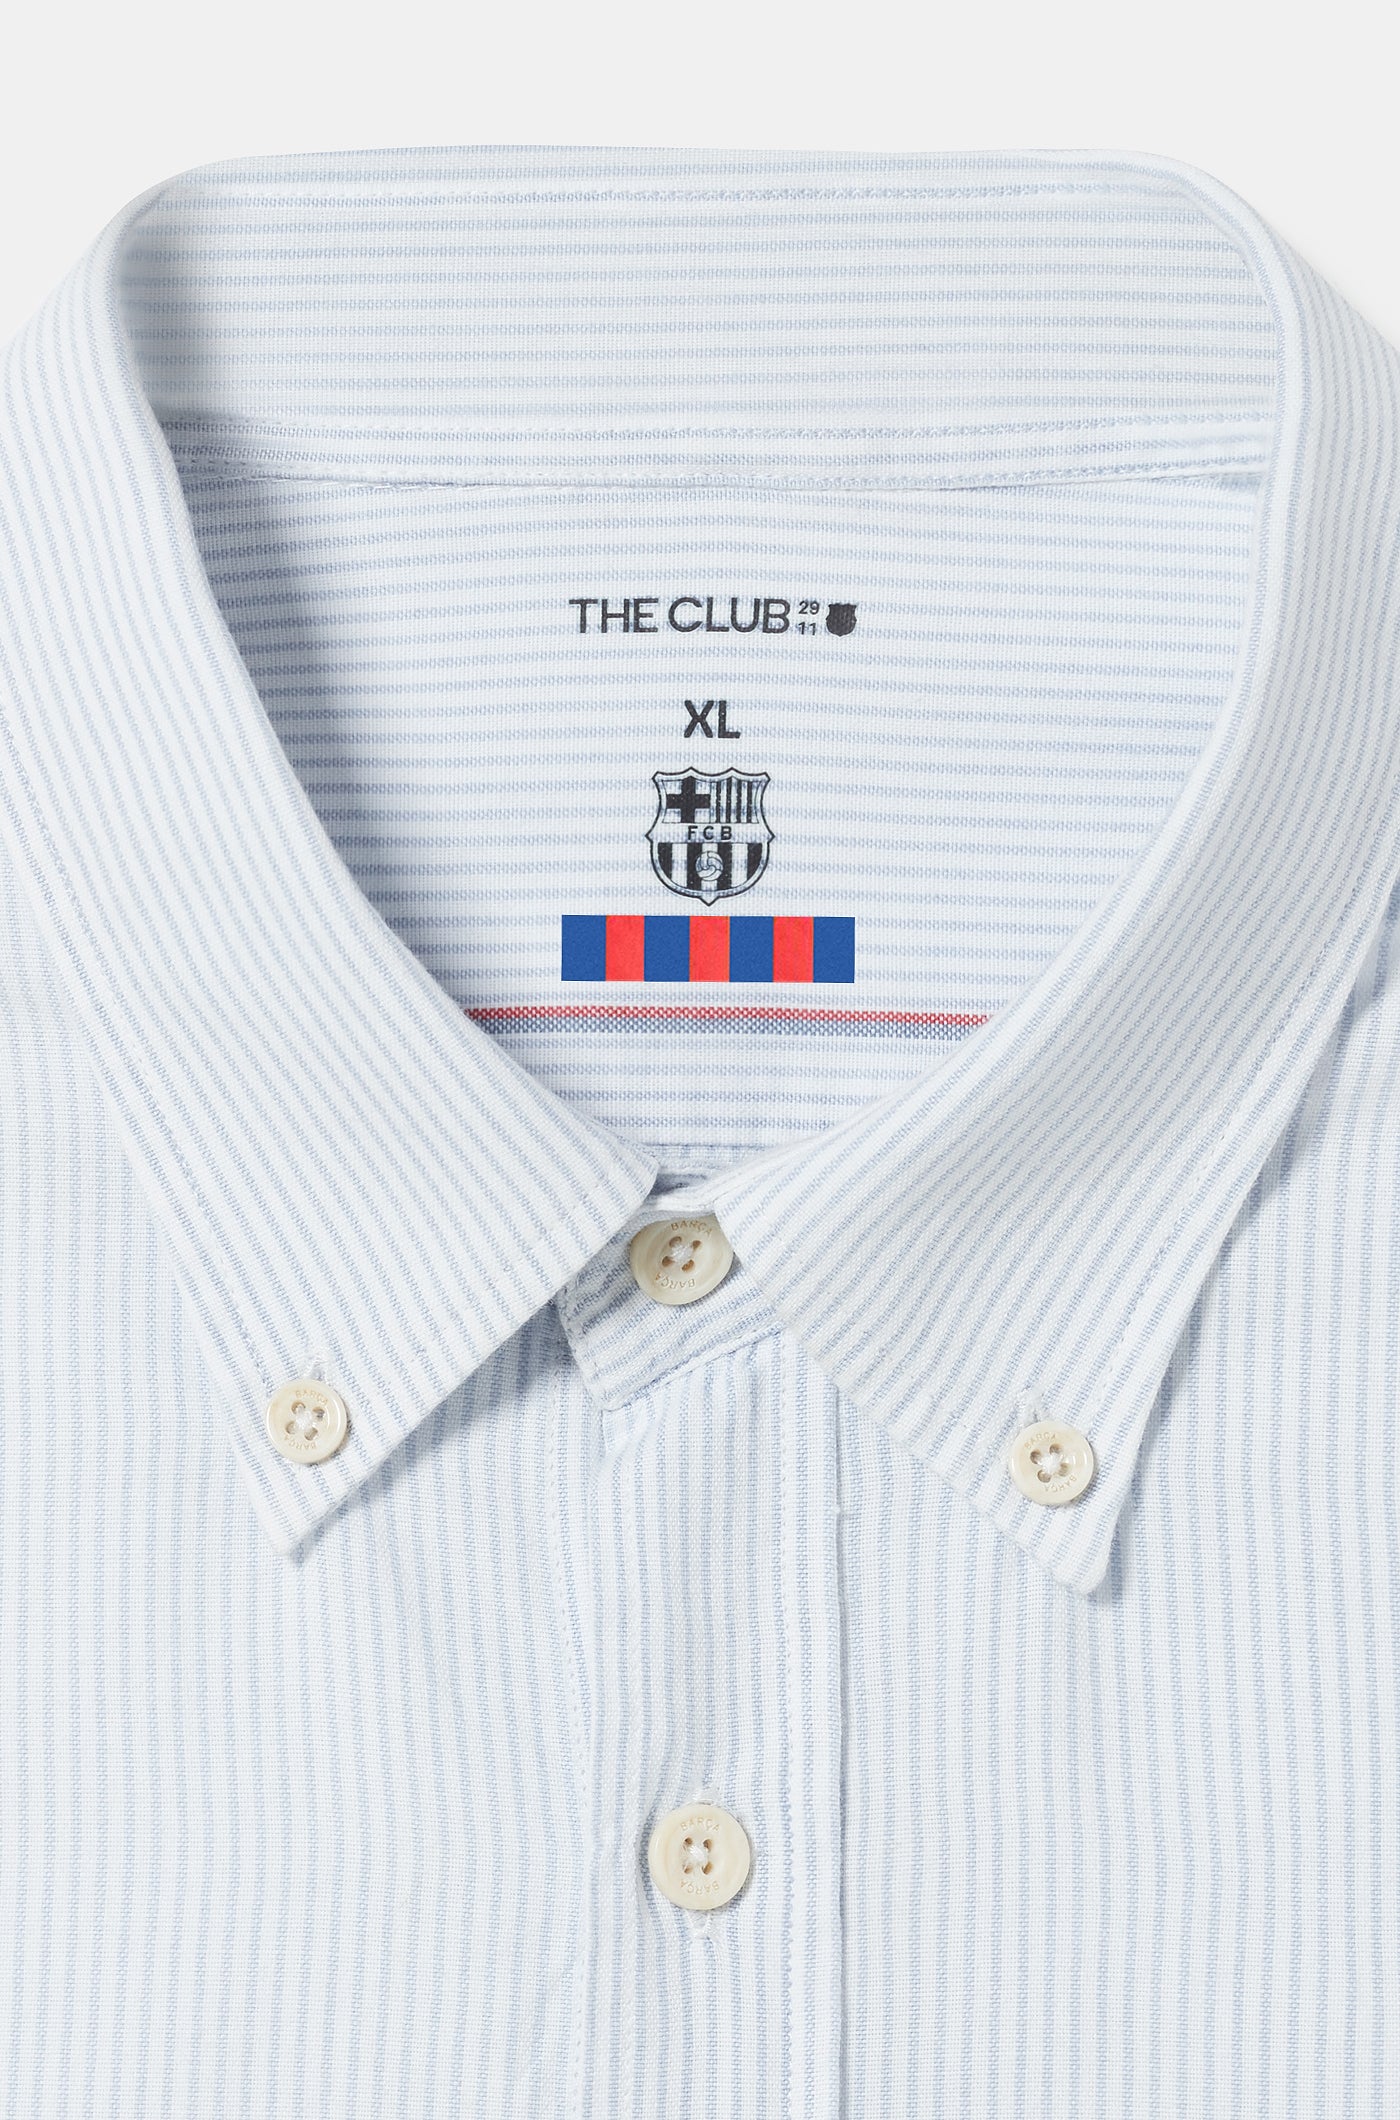 The Club Striped Indigo Shirt